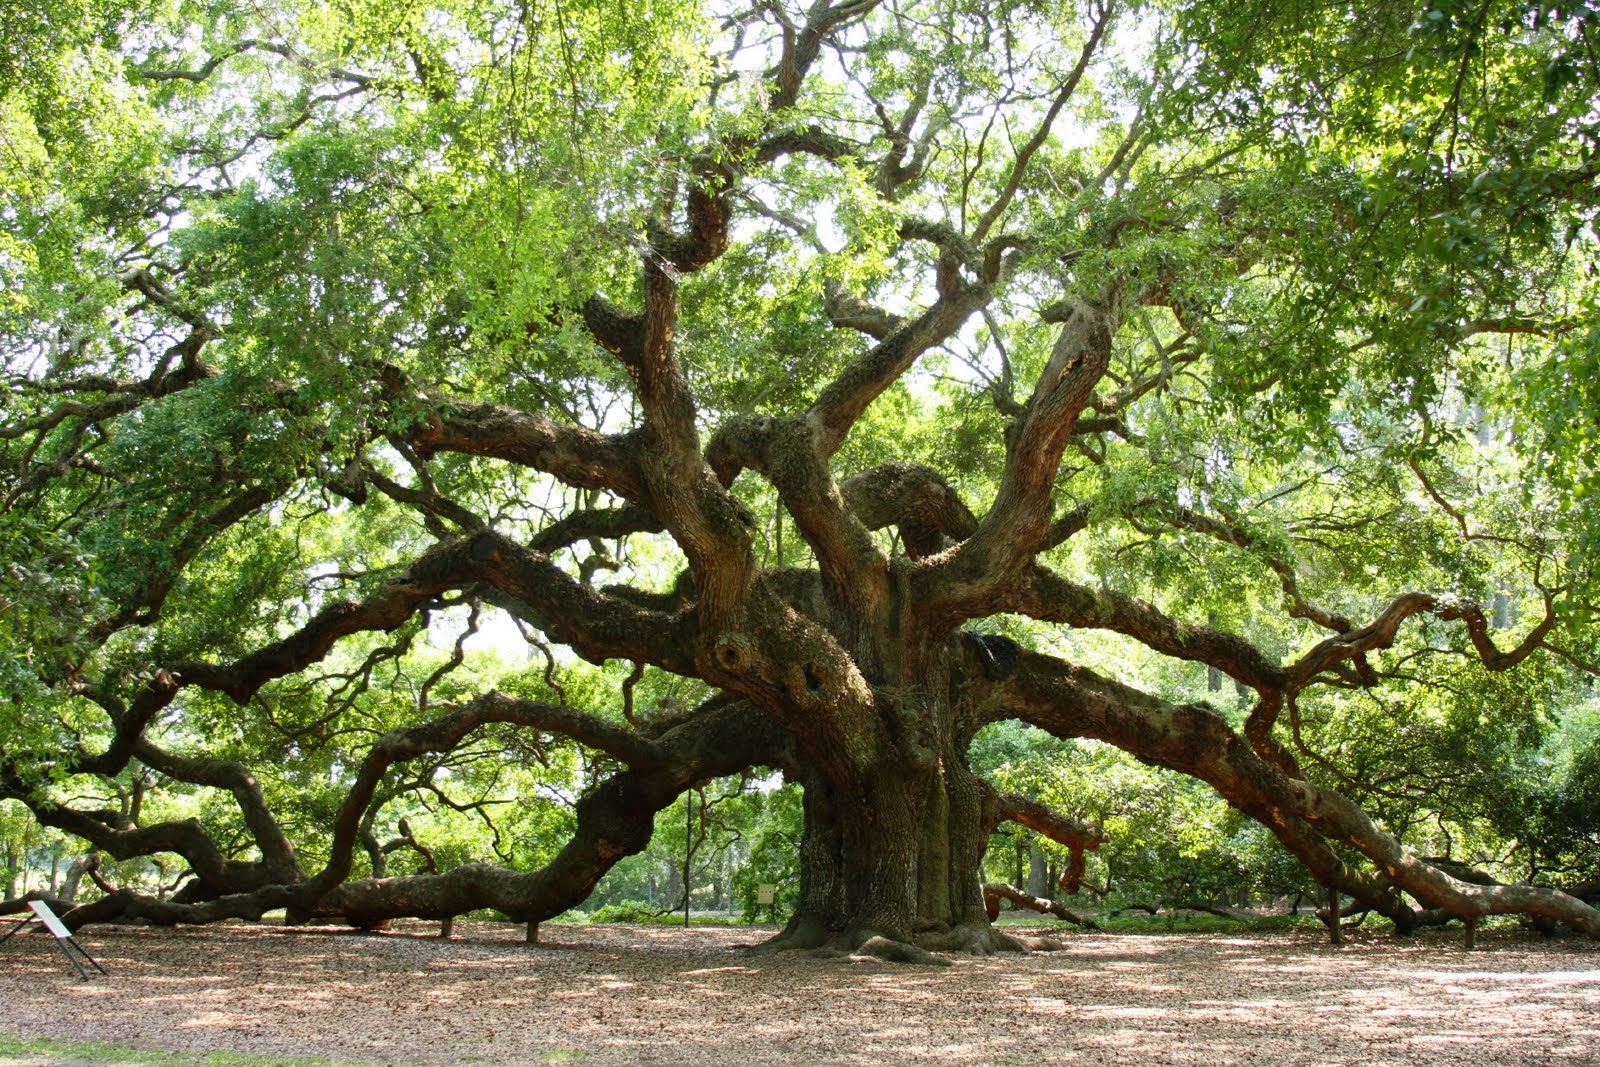 The 1,500 years old Fairy-Talesque Angel Oak Tree on Johns Island, South Carolina, USA